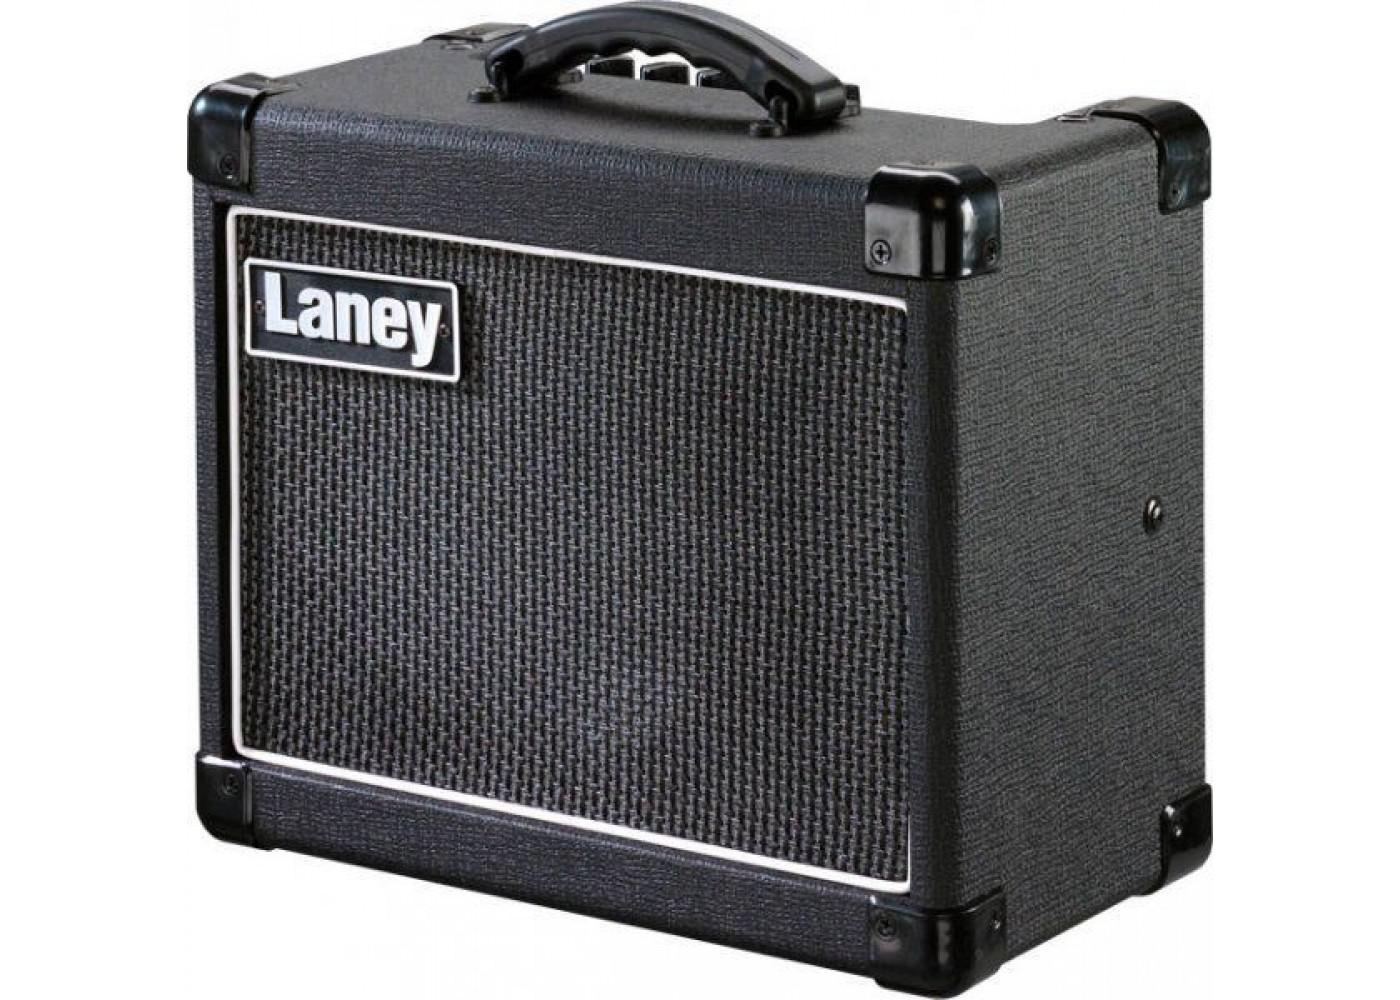 Laney - Combo Guitarra Electrica Vintage, 10 W 1 x 6.5 Mod.LG12_105